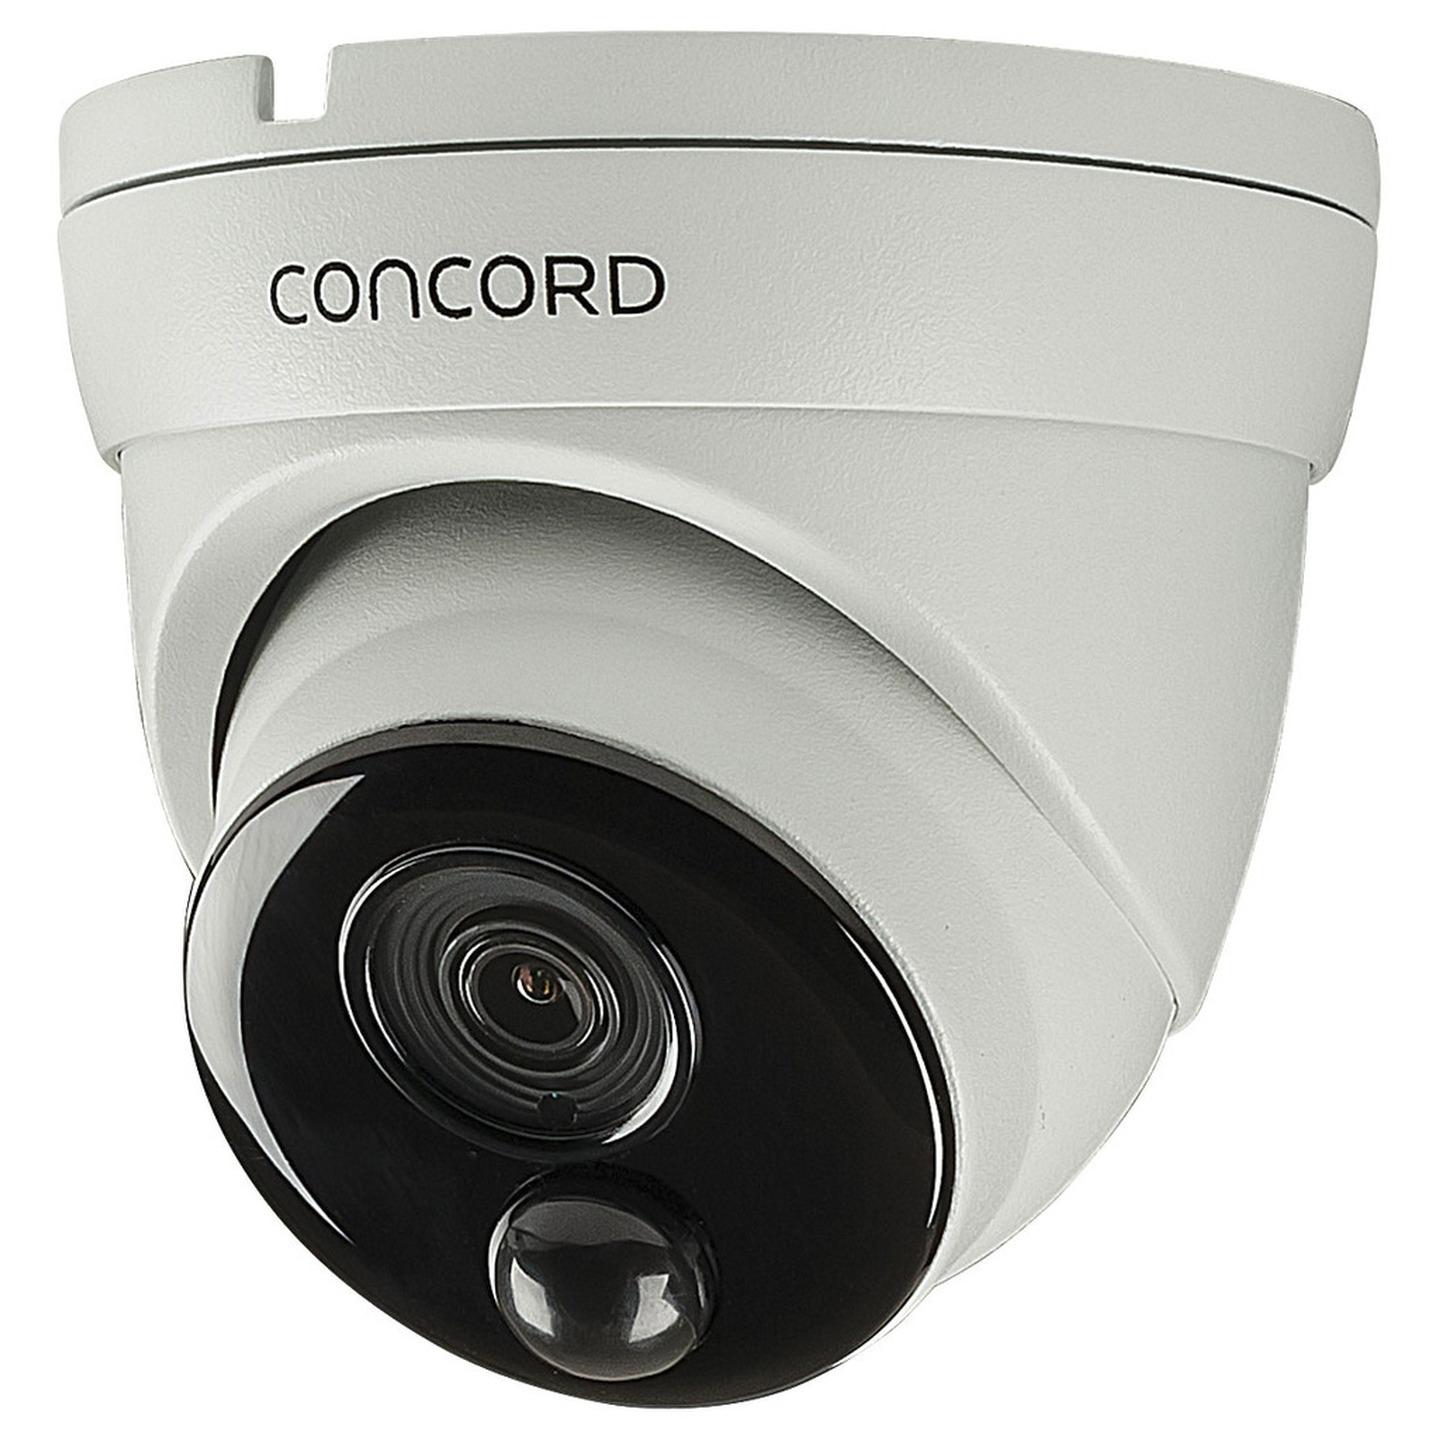 Concord AHD 5MP PIR Dome Camera